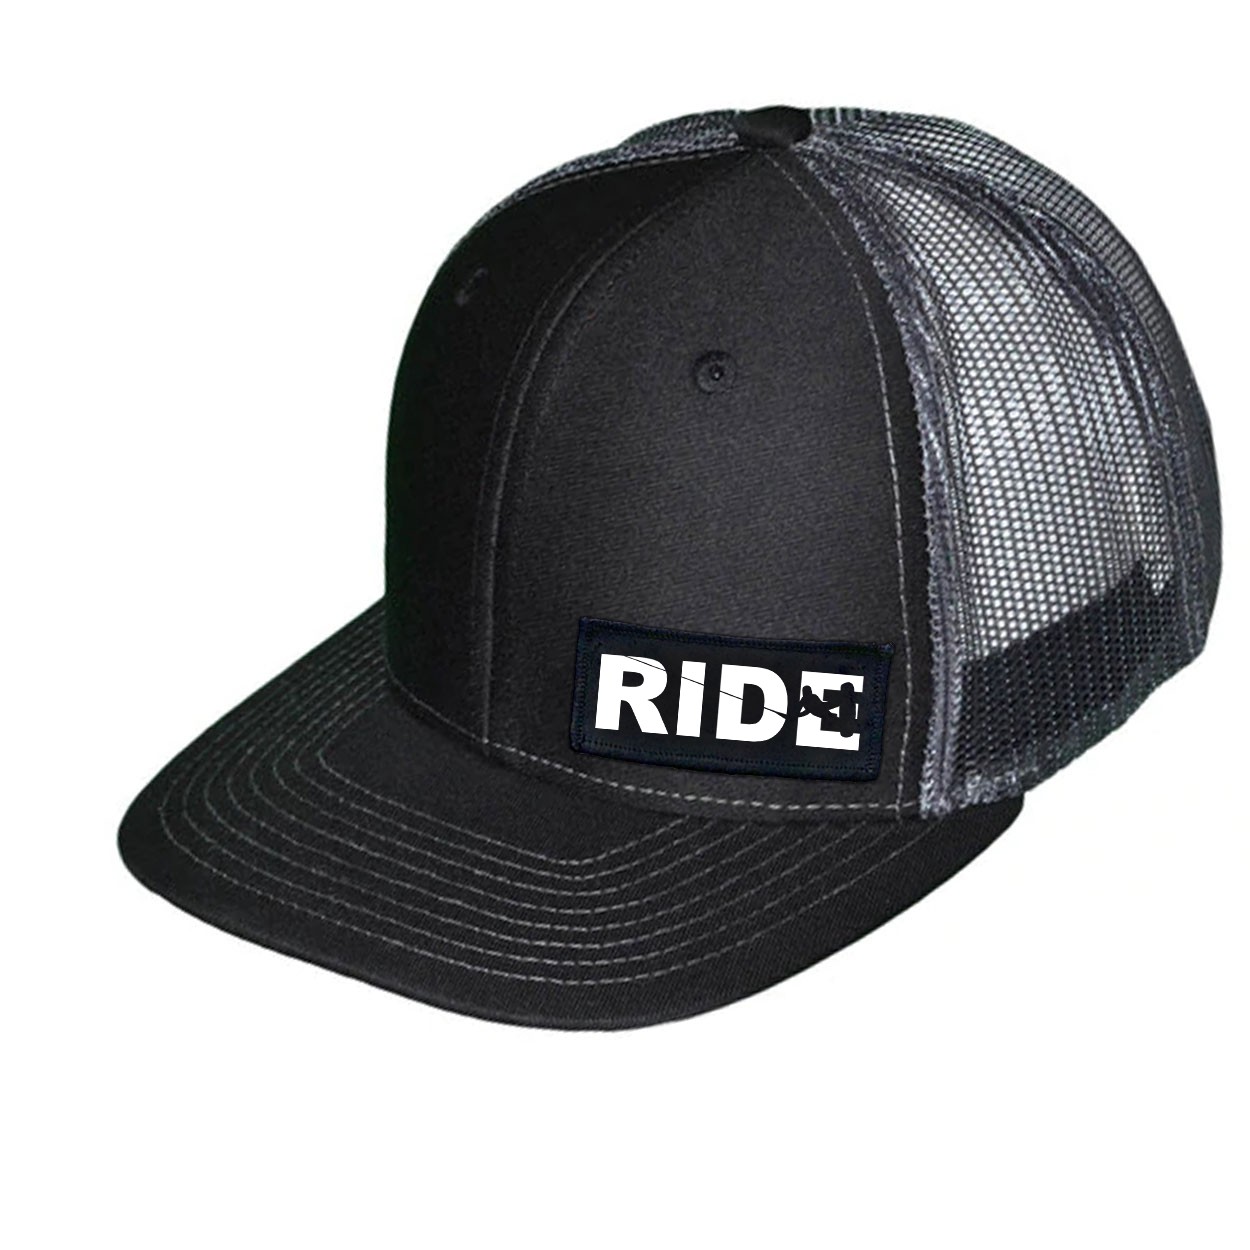 Ride Wakeboard Logo Night Out Woven Patch Snapback Trucker Hat Black/Dark Gray (White Logo)